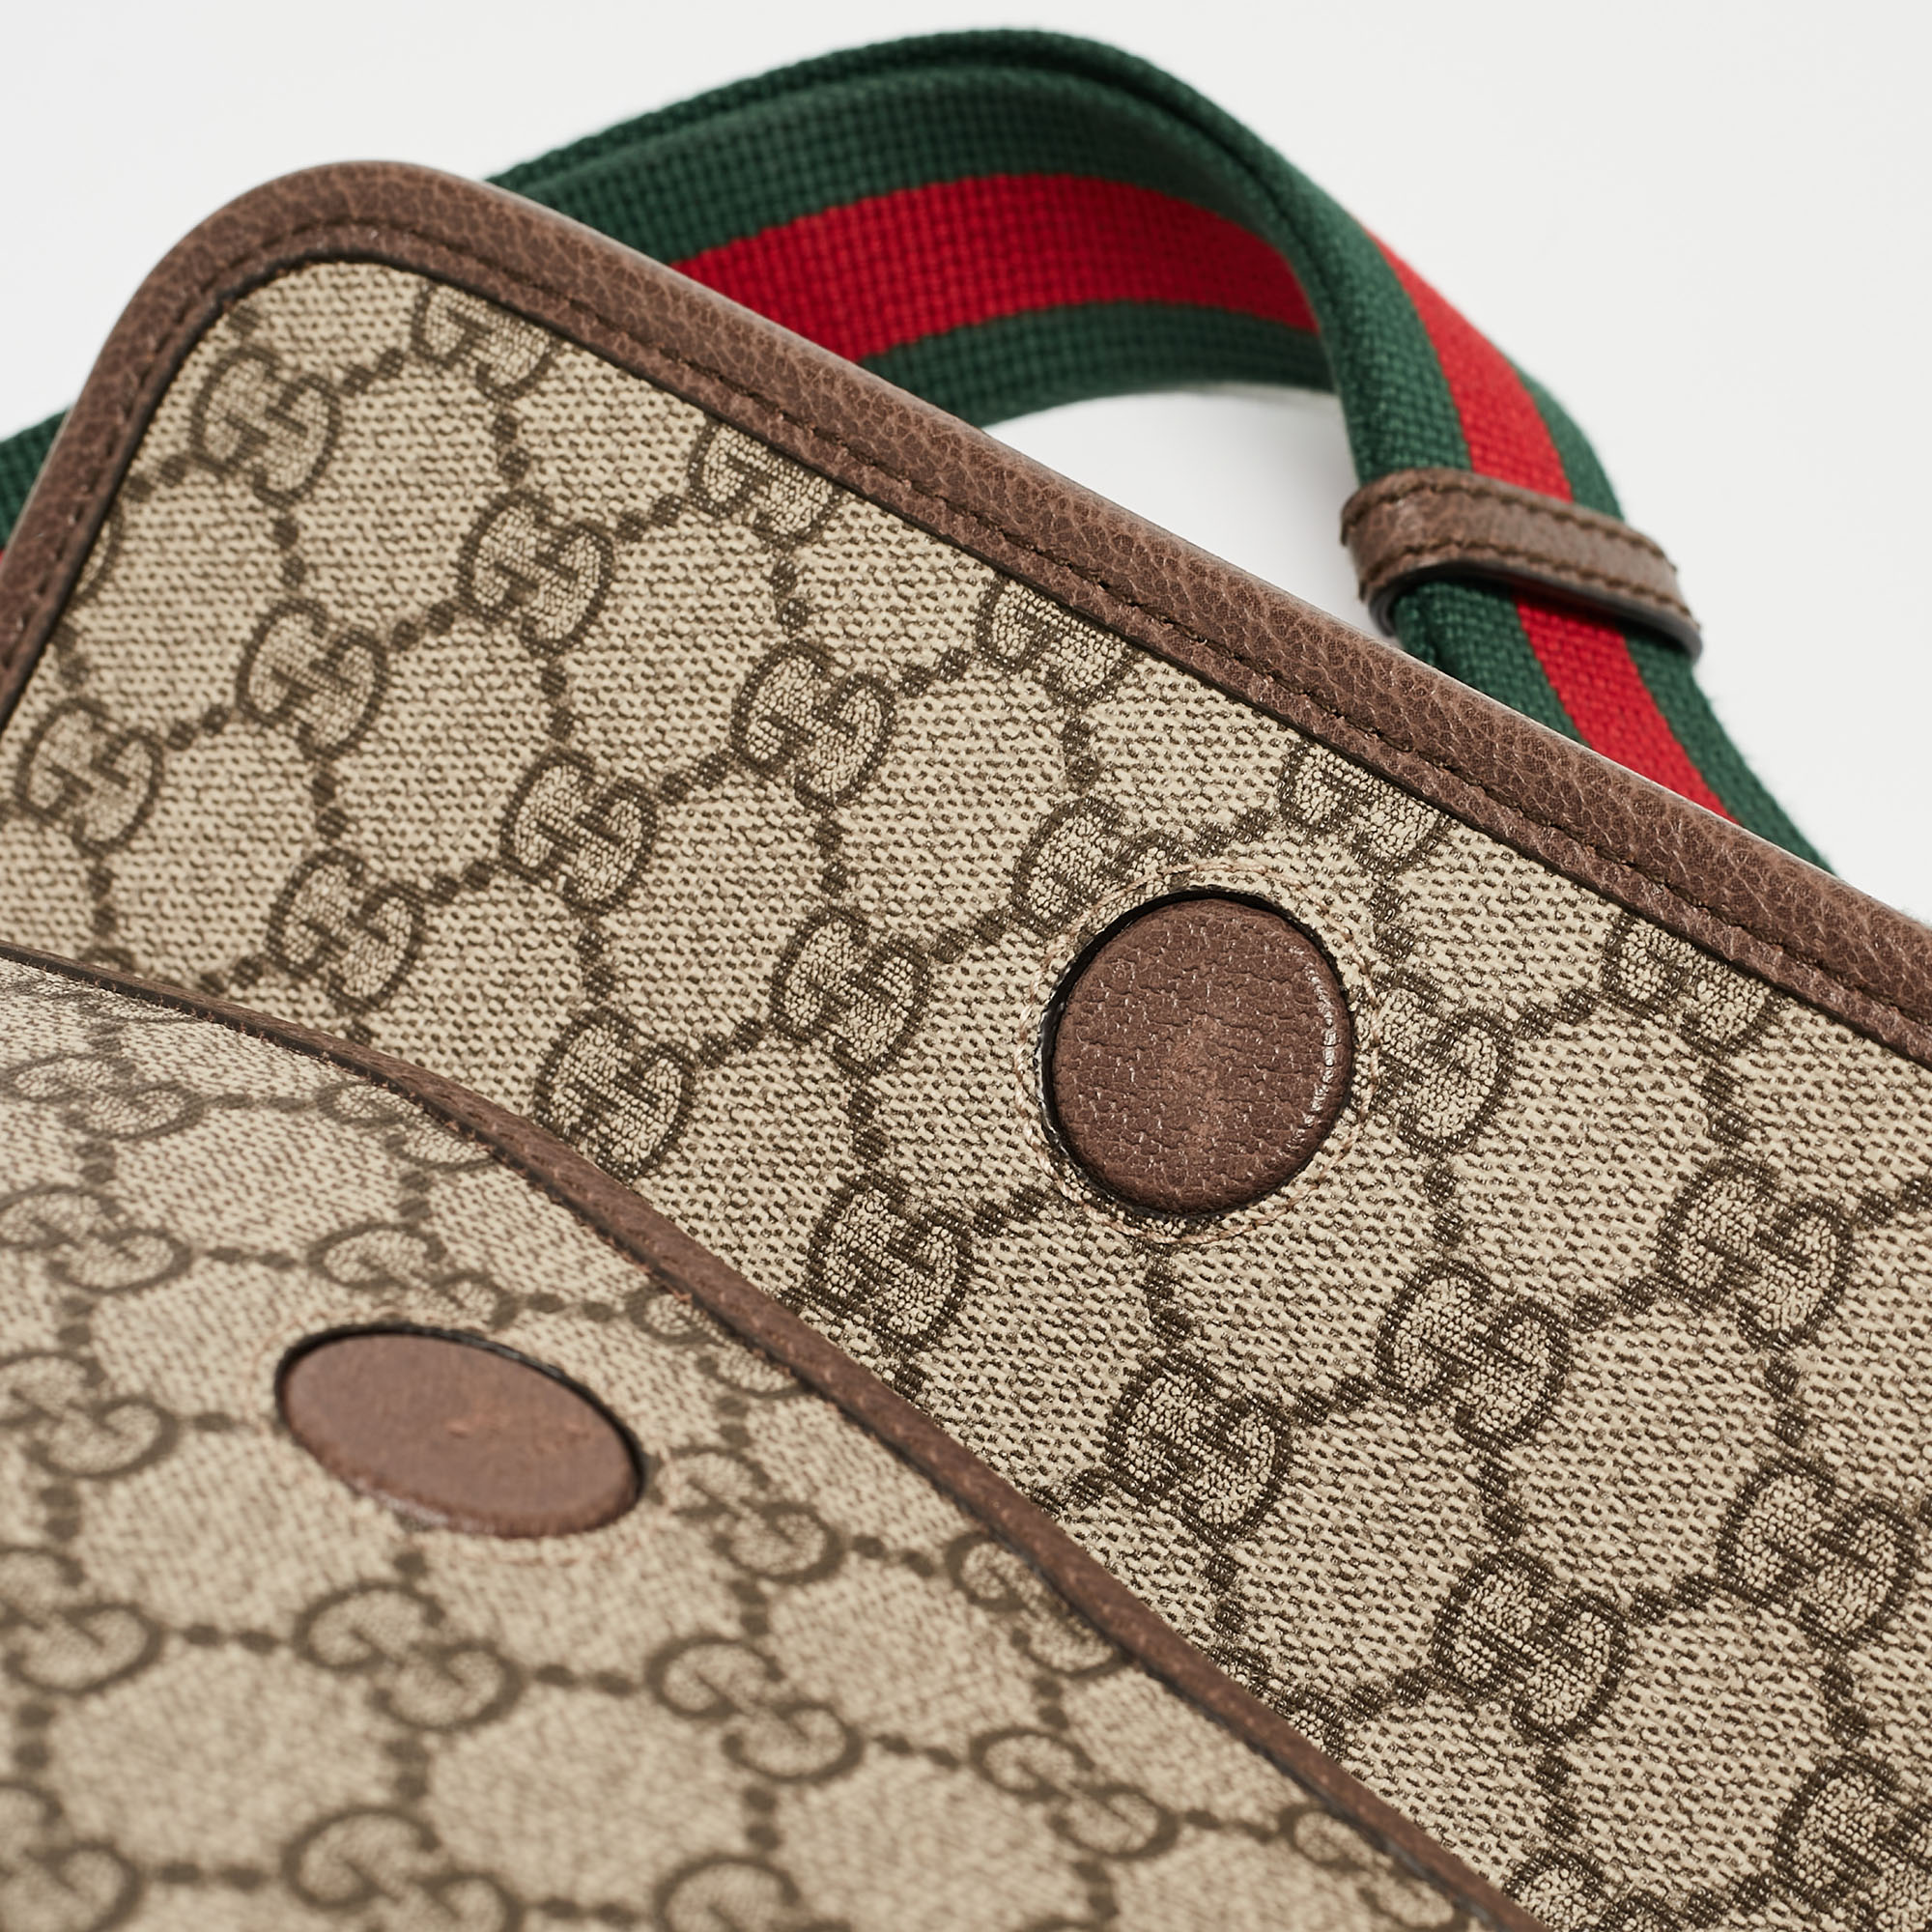 Gucci Beige GG Supreme Canvas And Leather Neo Vintage Belt Bag